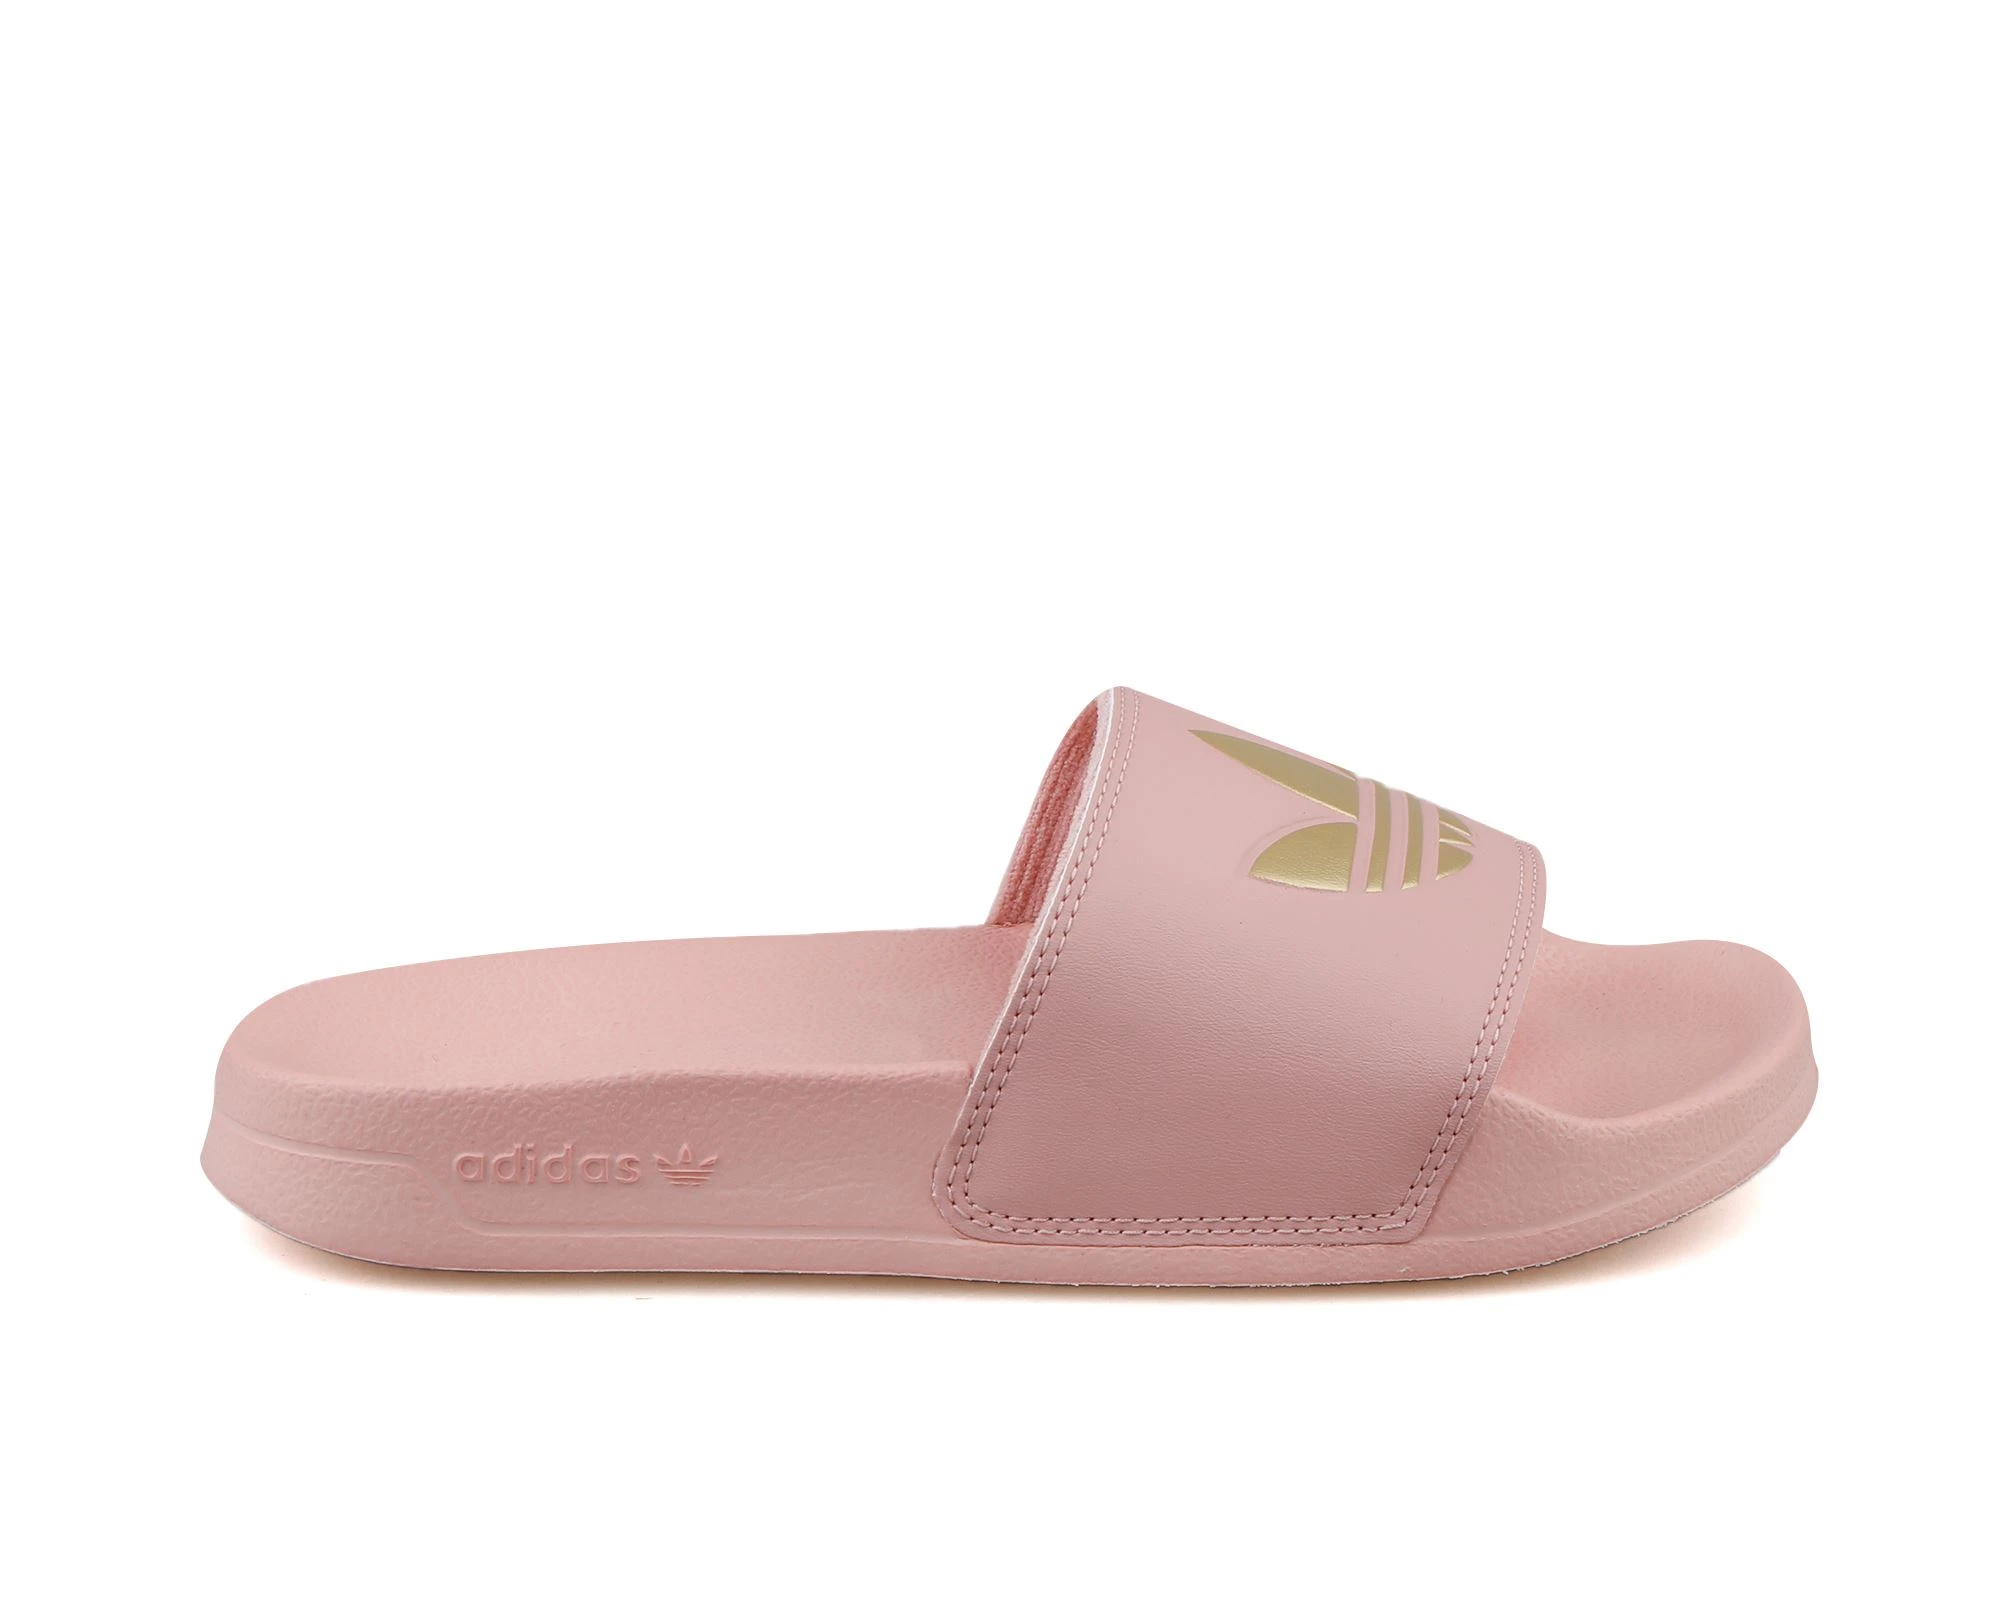 knal pensioen Gedrag Adidas Original Adilette Comfort Pink women's Slippers Bathroom Indoor  Slippers Soft Sole Sandals| | - AliExpress